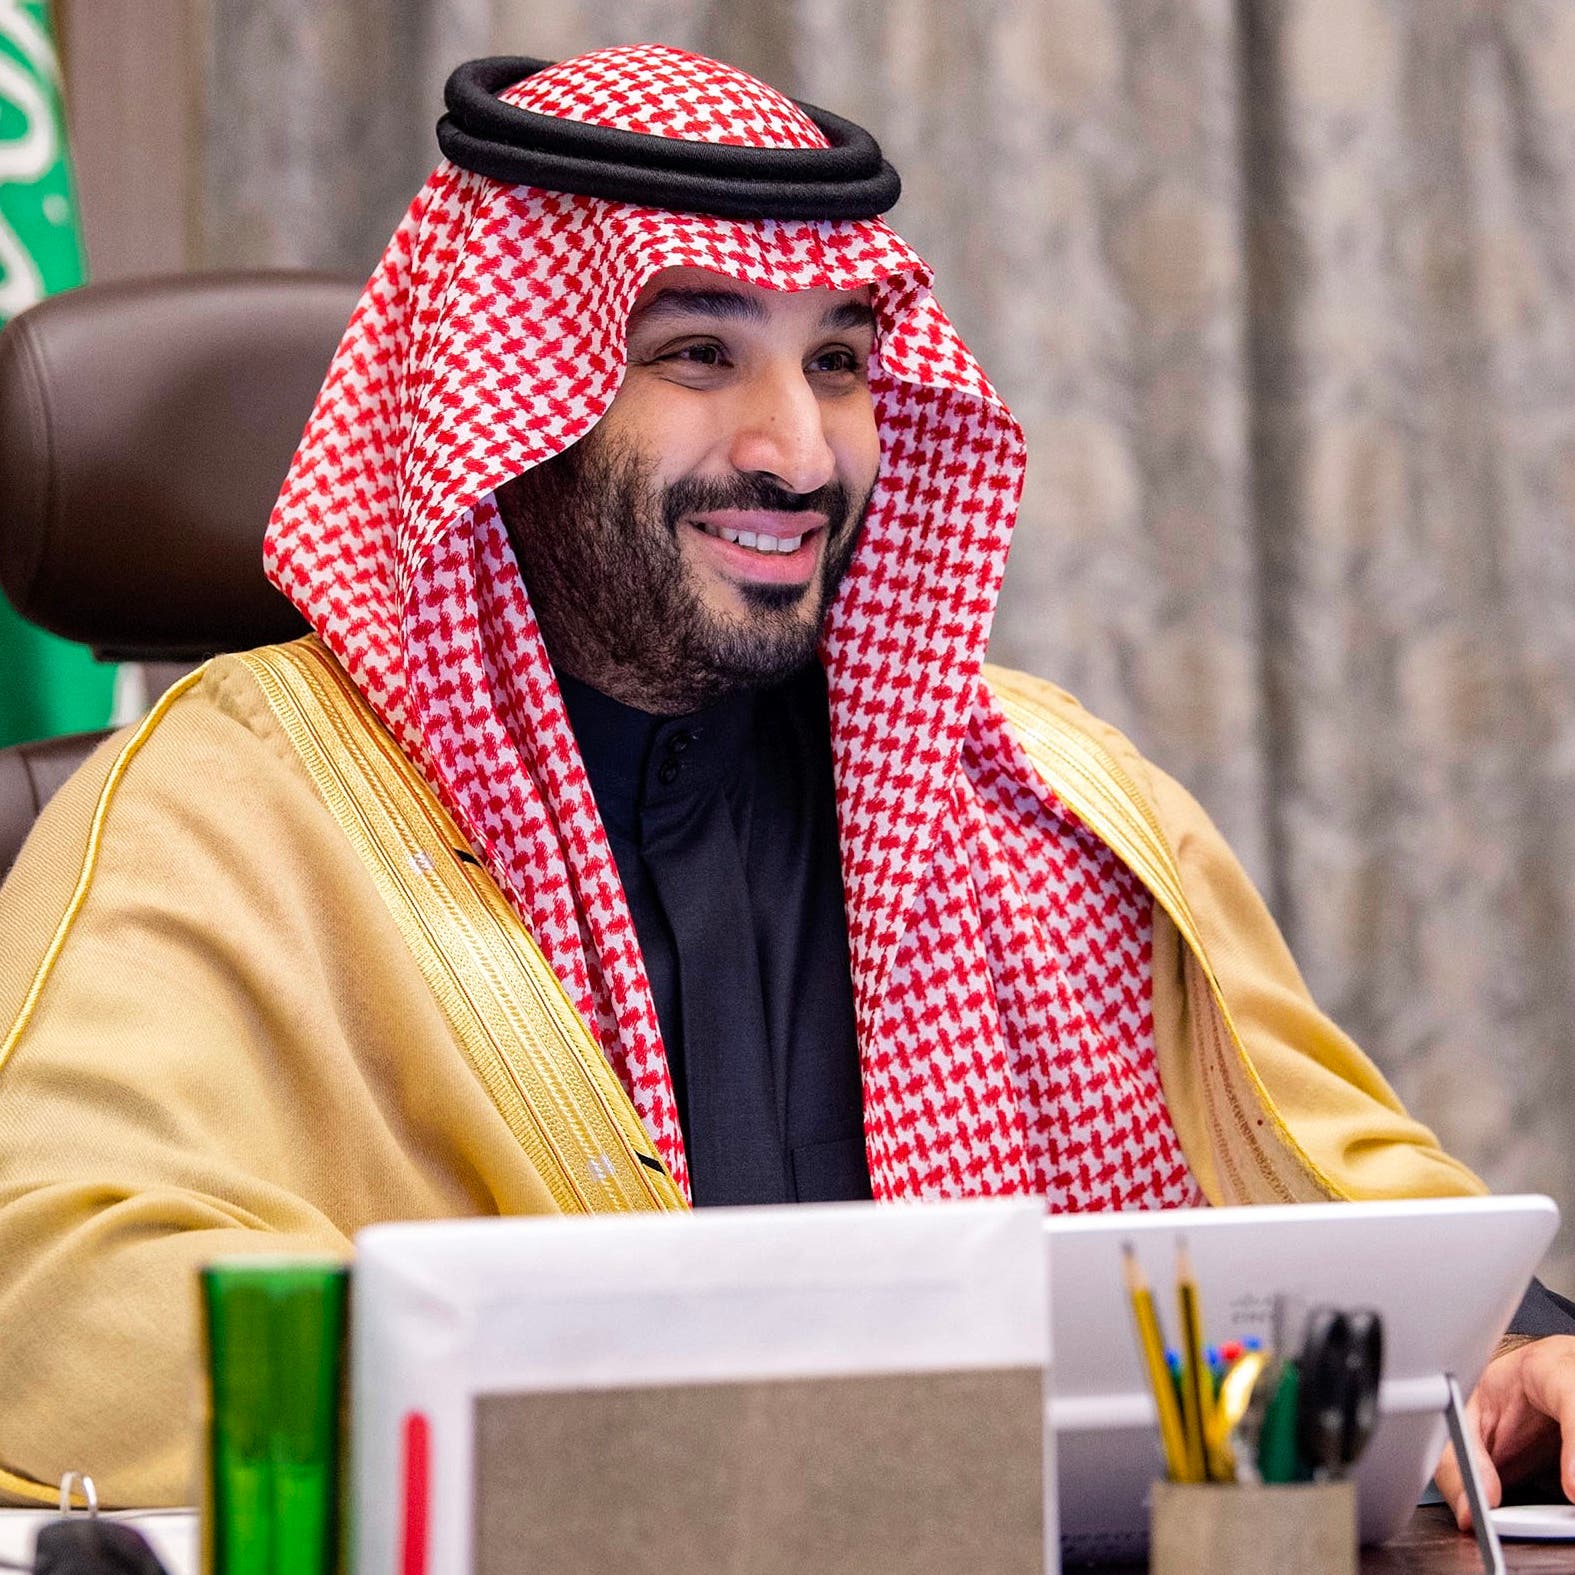 Crown Prince Mohammed bin Salman is advancing Saudi Arabia’s transformation